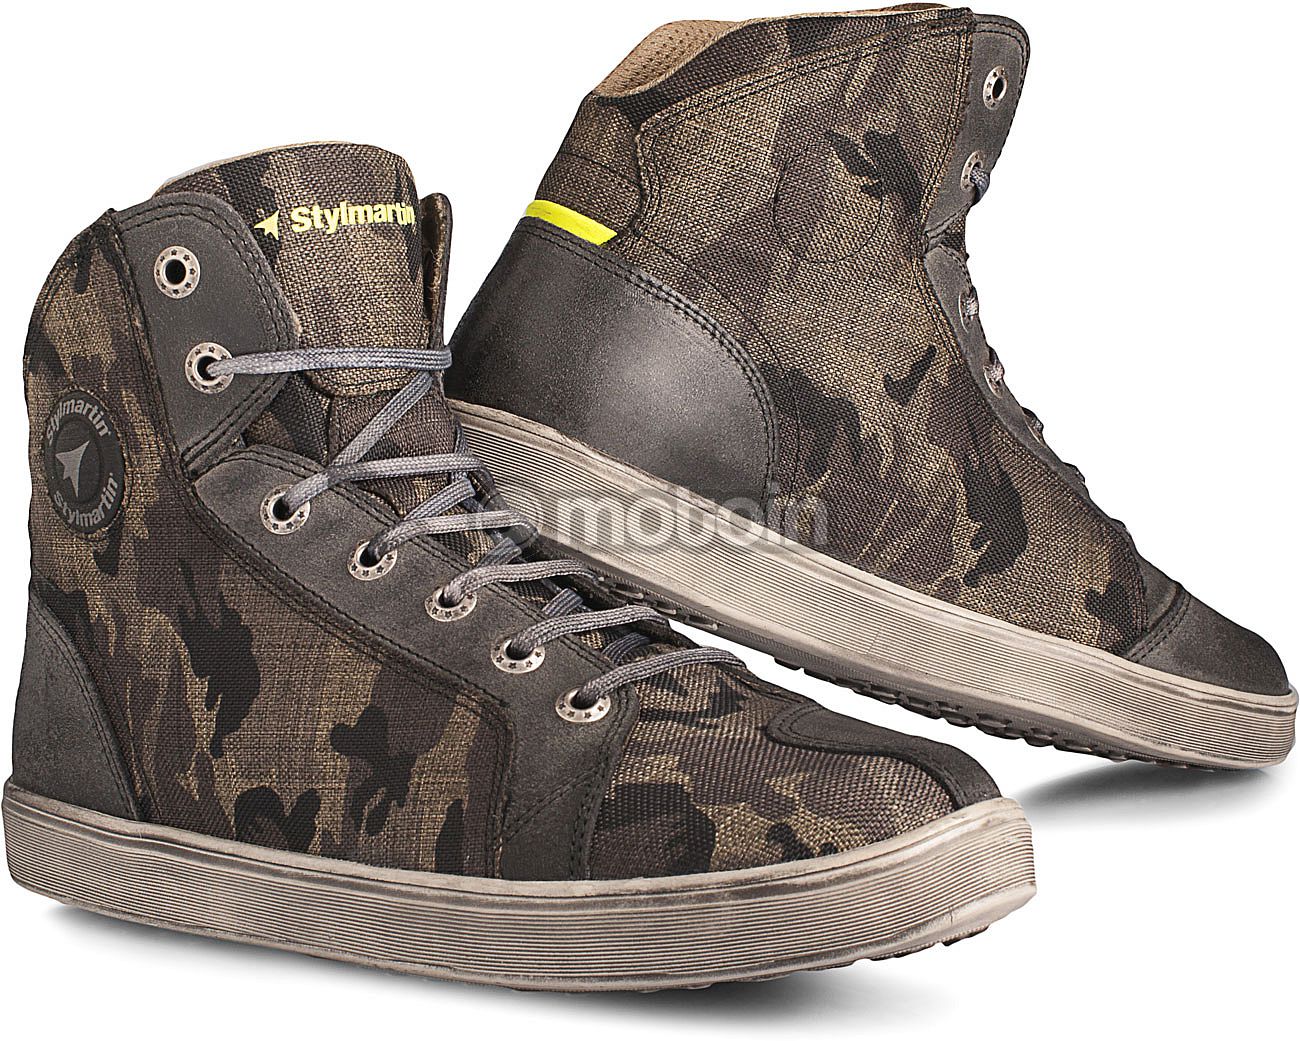 Stylmartin Raptor Evo, shoes waterproof